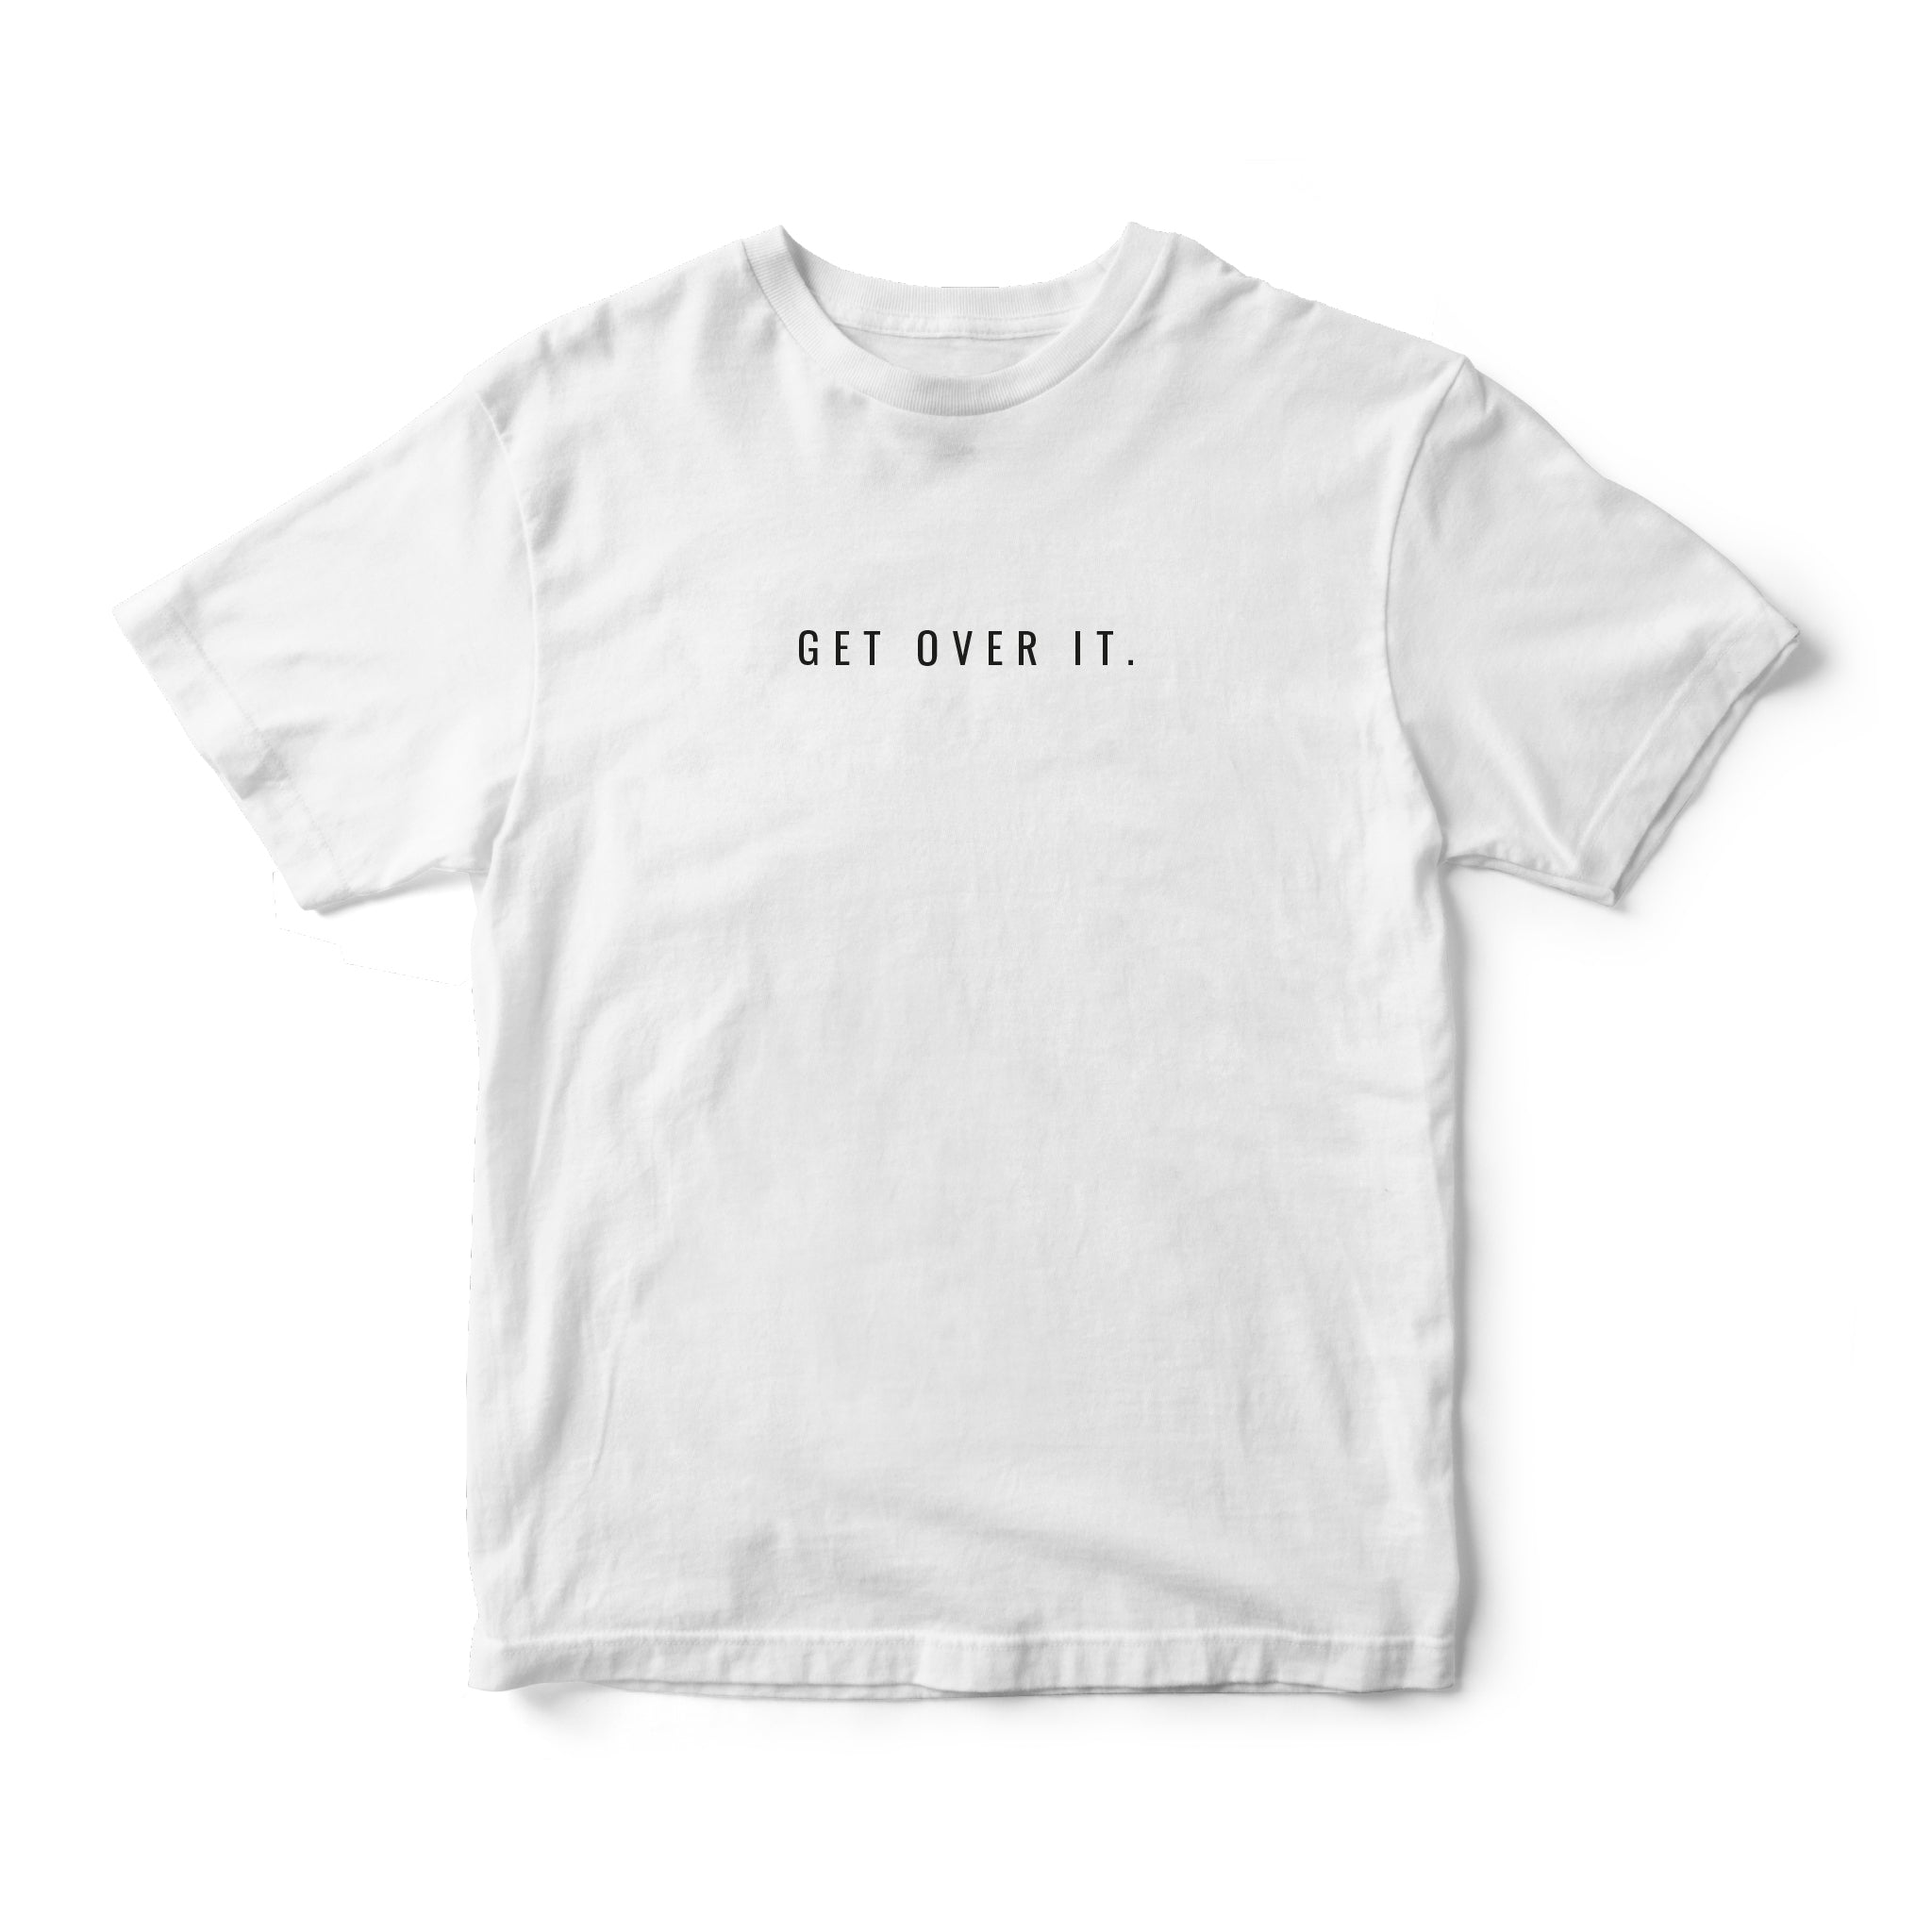 Instee Get Over It T-shirt Unisex 100% Cotton